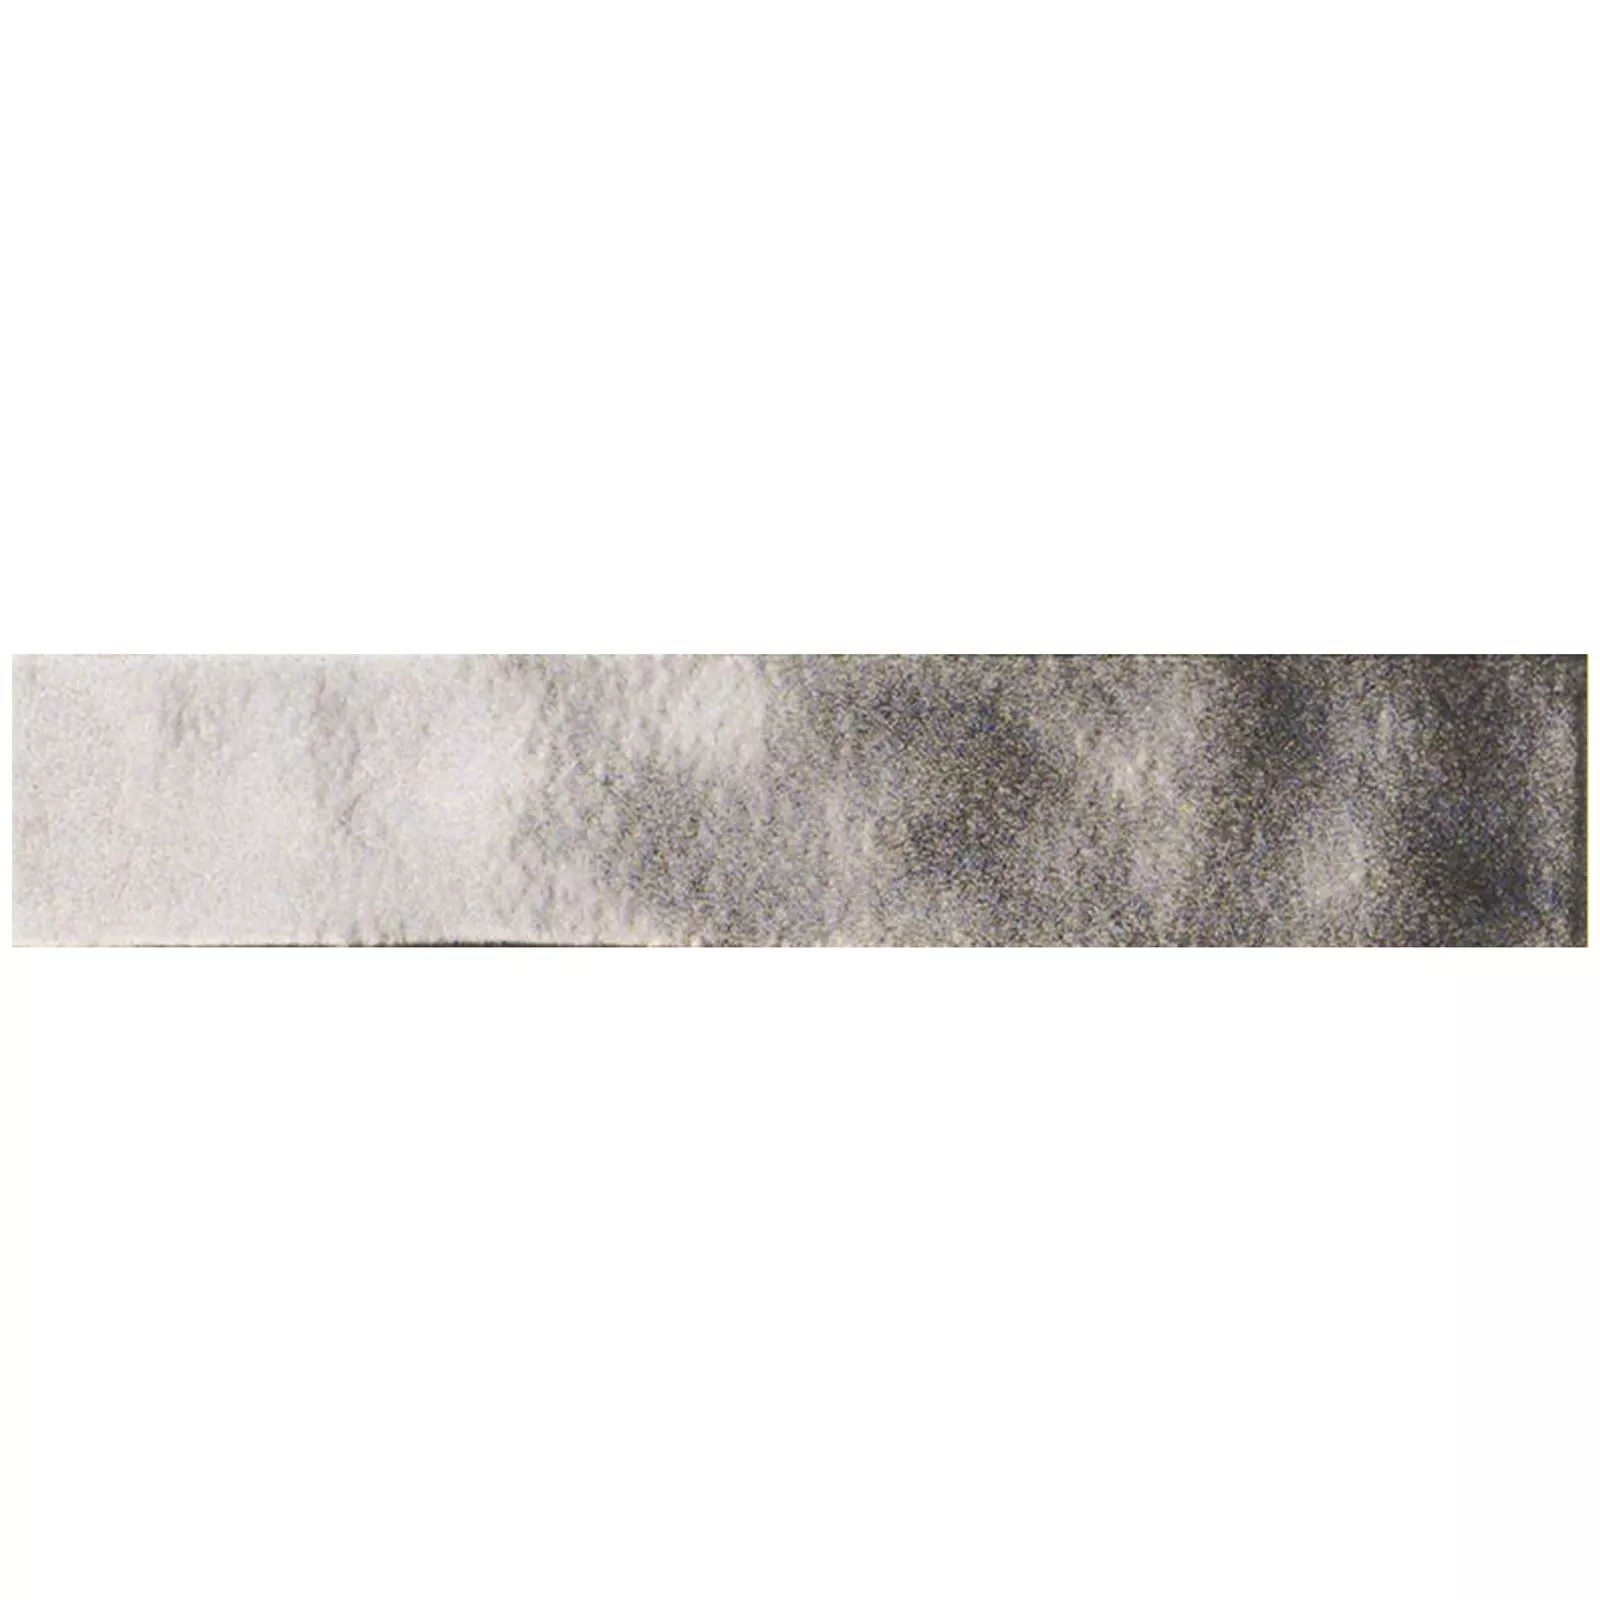 Próbka Płytki Ścienne Montreal Karbowany Srebrny 5x25cm